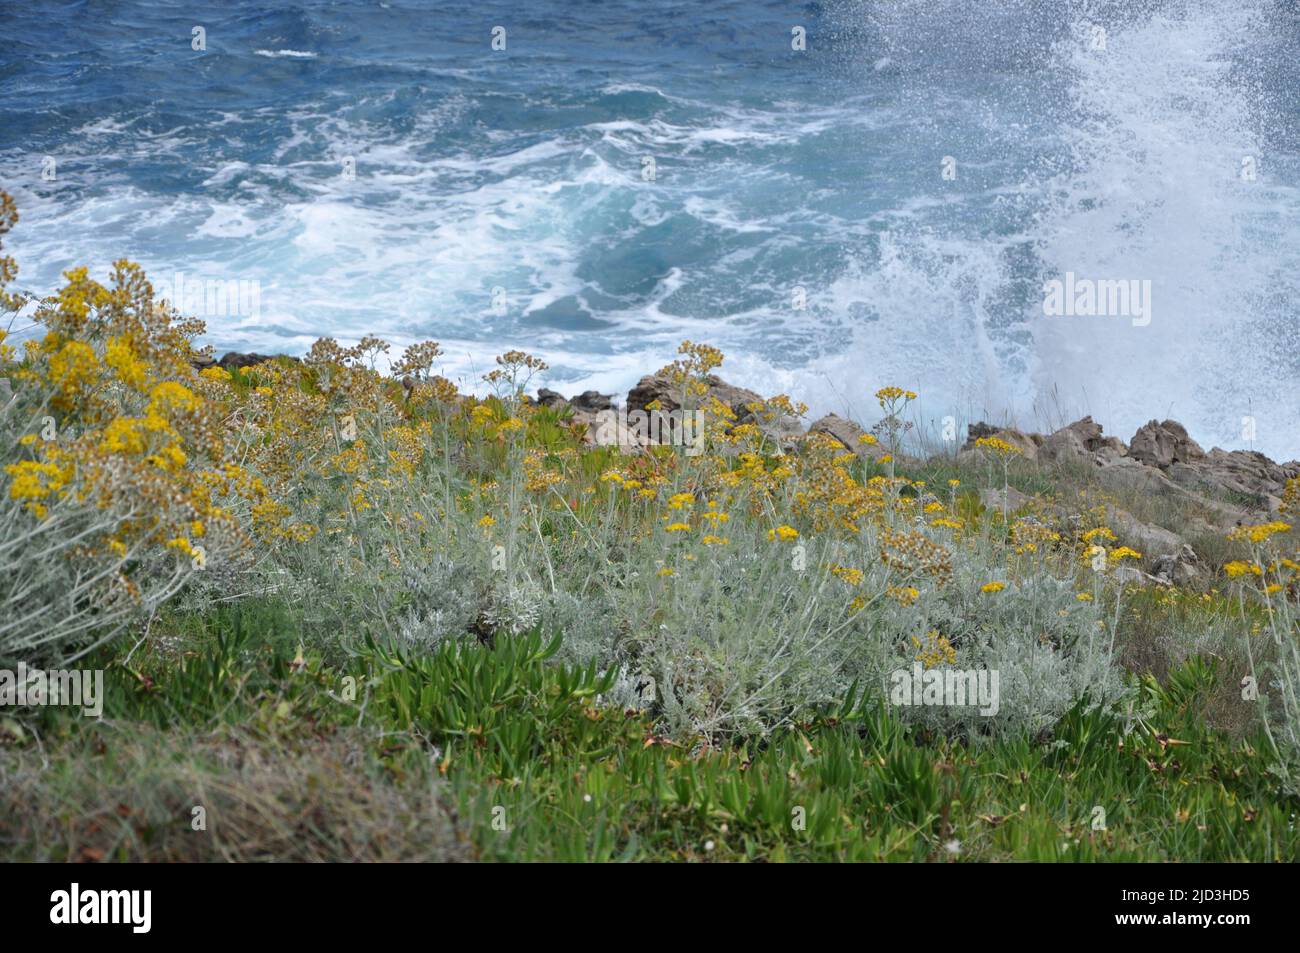 Sea waves crashing into the rocky coastline in Mali Losinj, Croatia. Yellow flower Silver ragwort (Jacobaea maritima). Adriatic Sea splashing on the c. Stock Photo